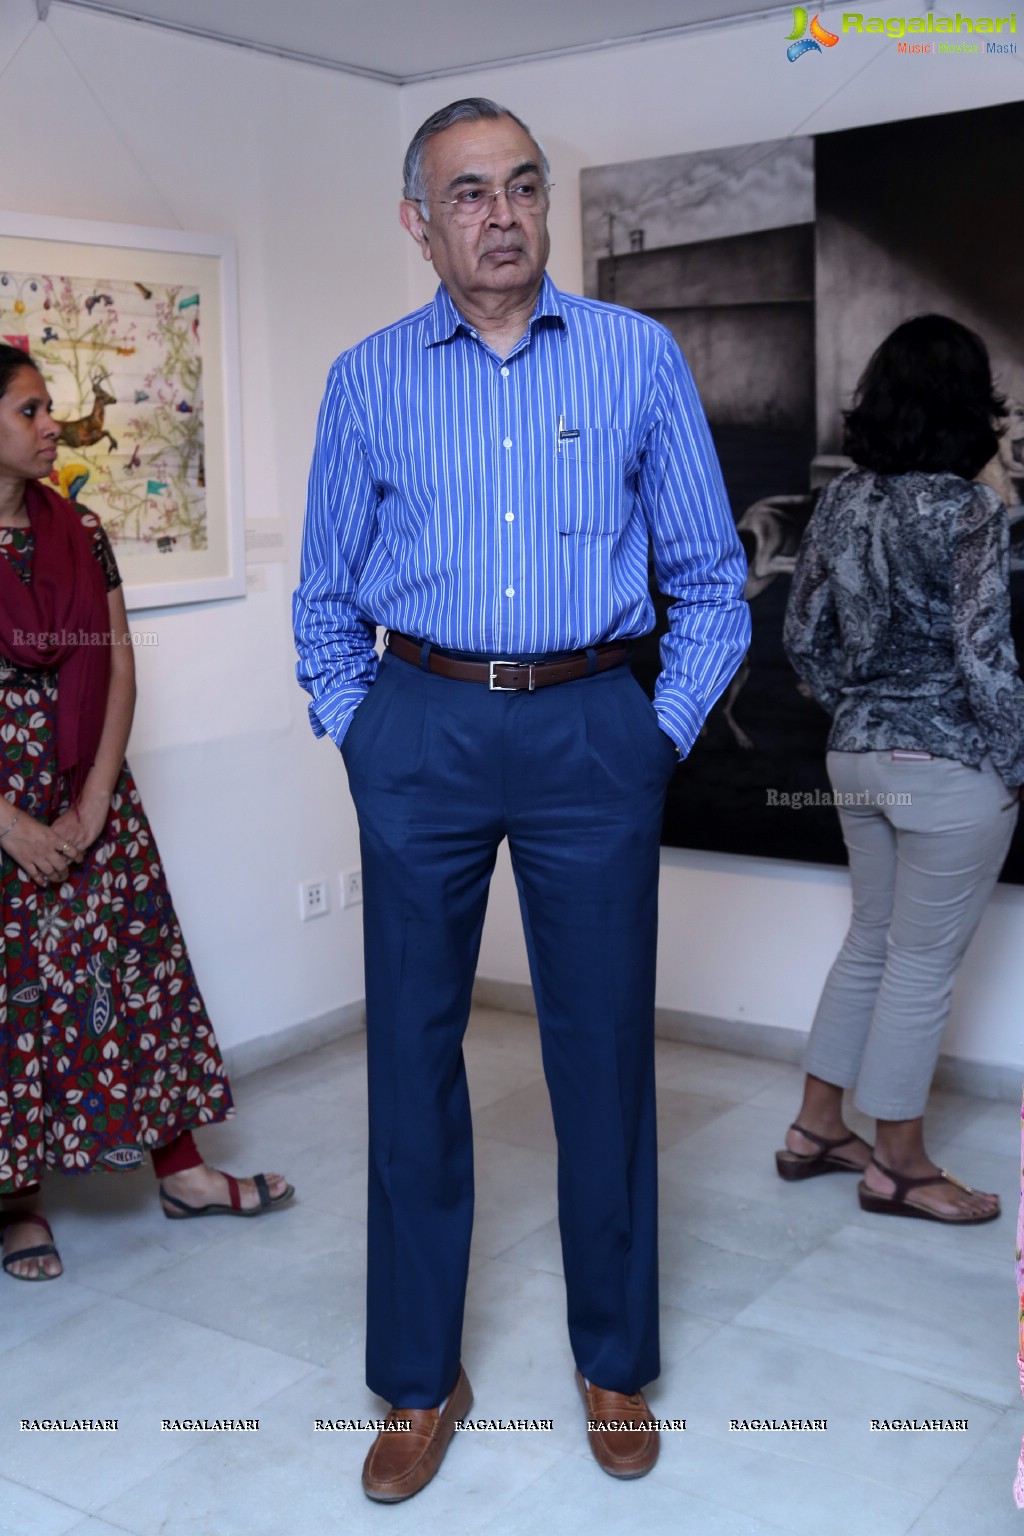 BALANCE - Art Exhibition at Shrishti Art Gallery